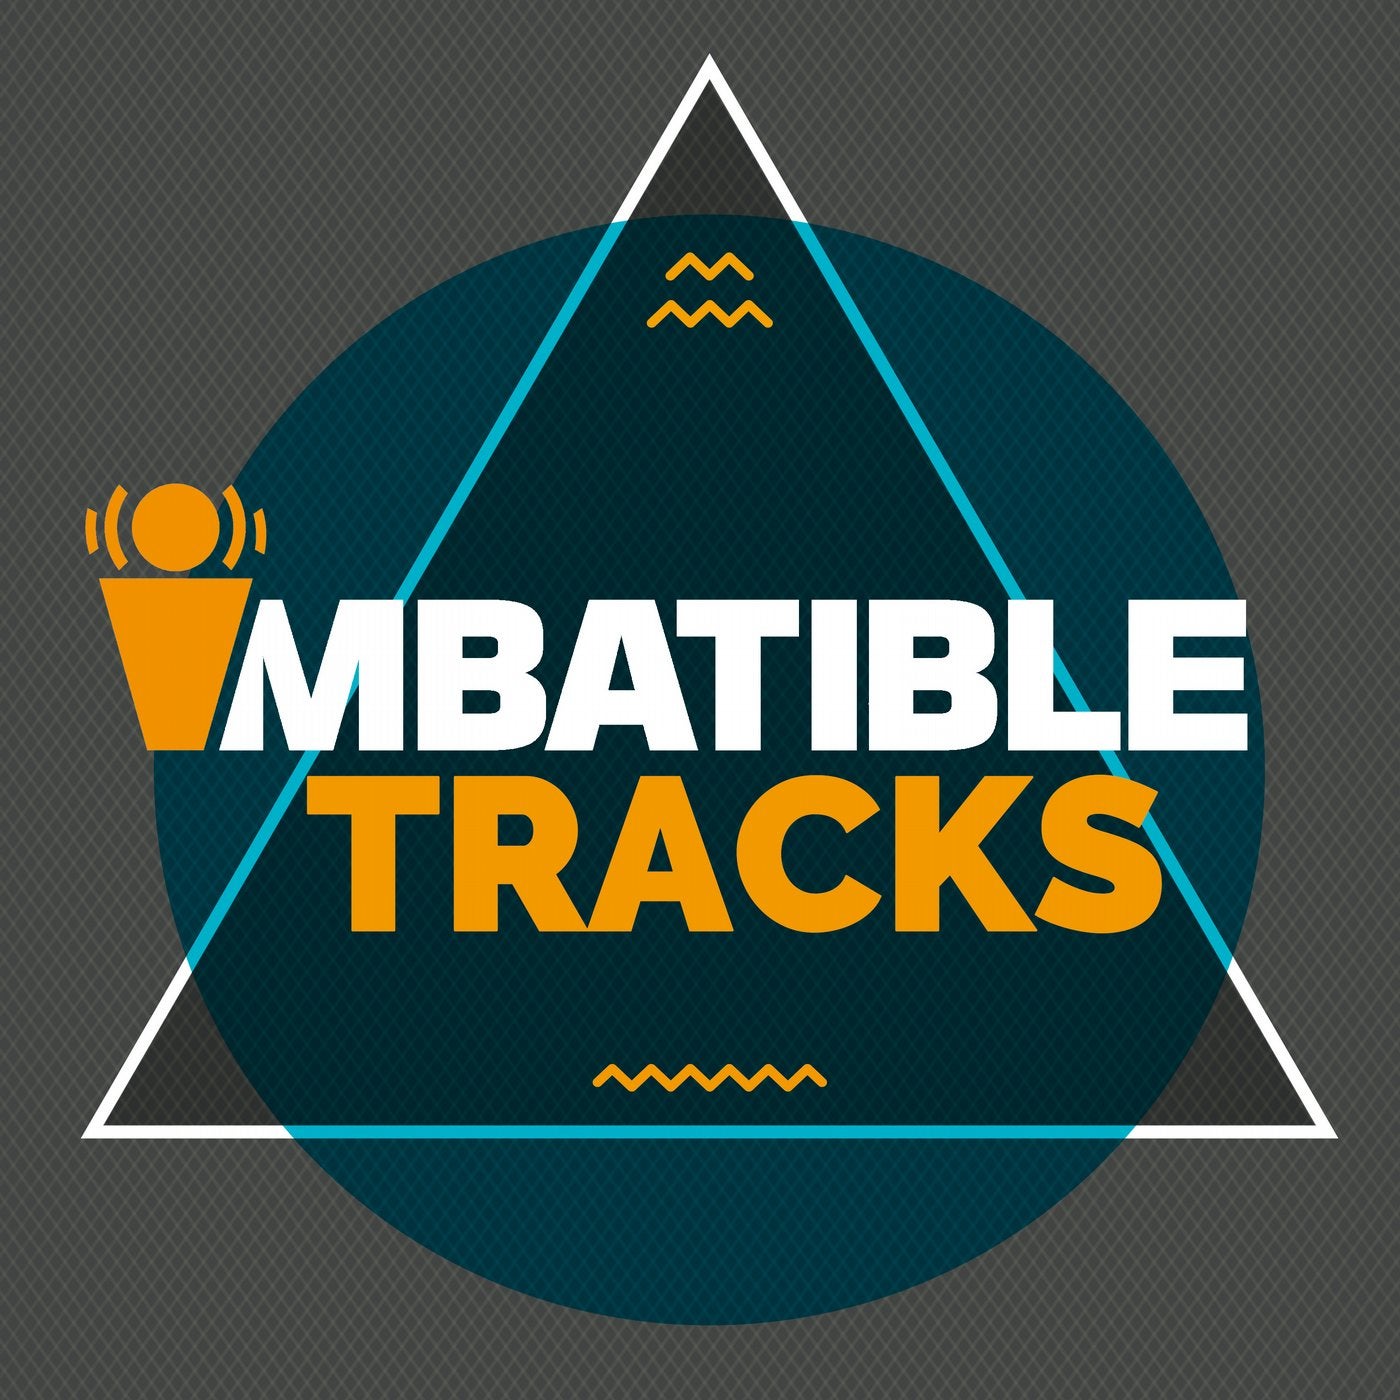 Imbatible Tracks